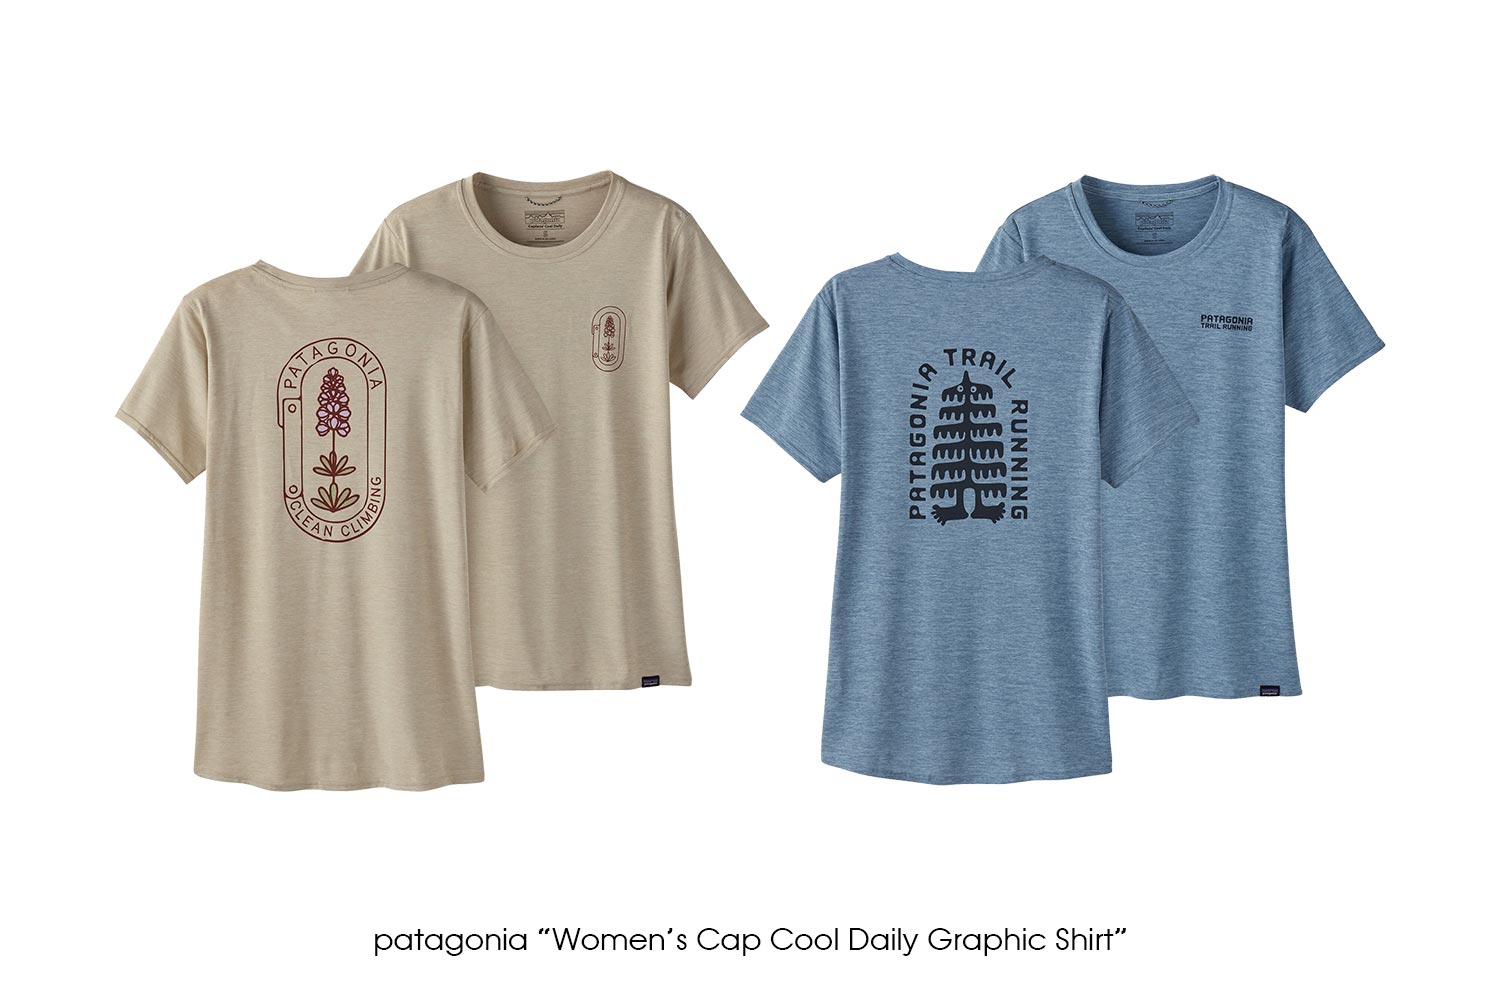 patagonia "Women's Cap Cool Daily Graphic Shirt"